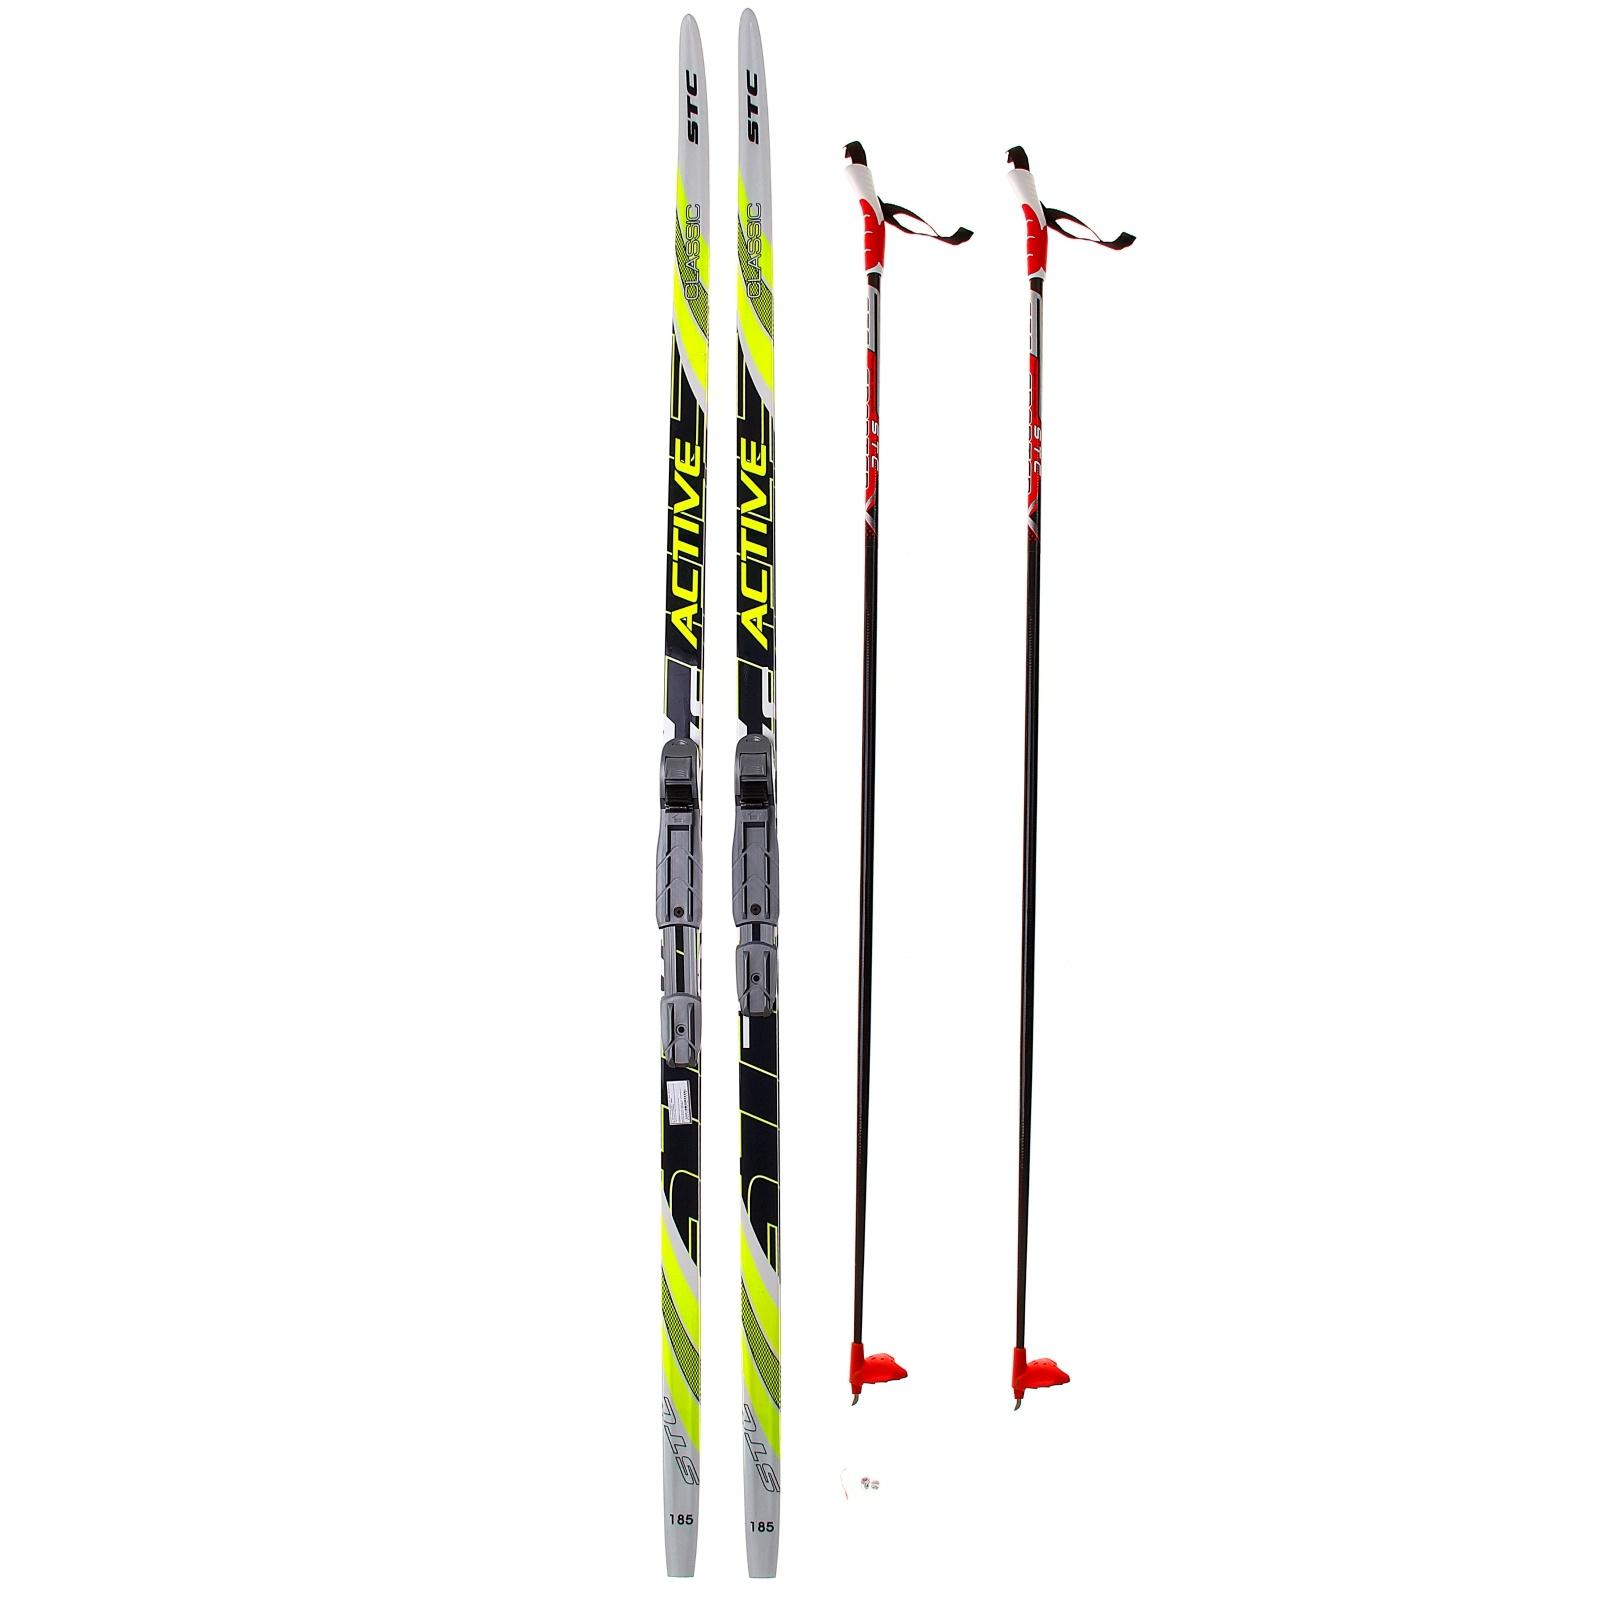 Купить лыжи 160. Лыжи STC Classic. Лыжи STC Pro Classic. Лыжи беговые дерево-пластик STC (ЦСТ), длина 150, цвет желтый. Модели лыж STC White Base.